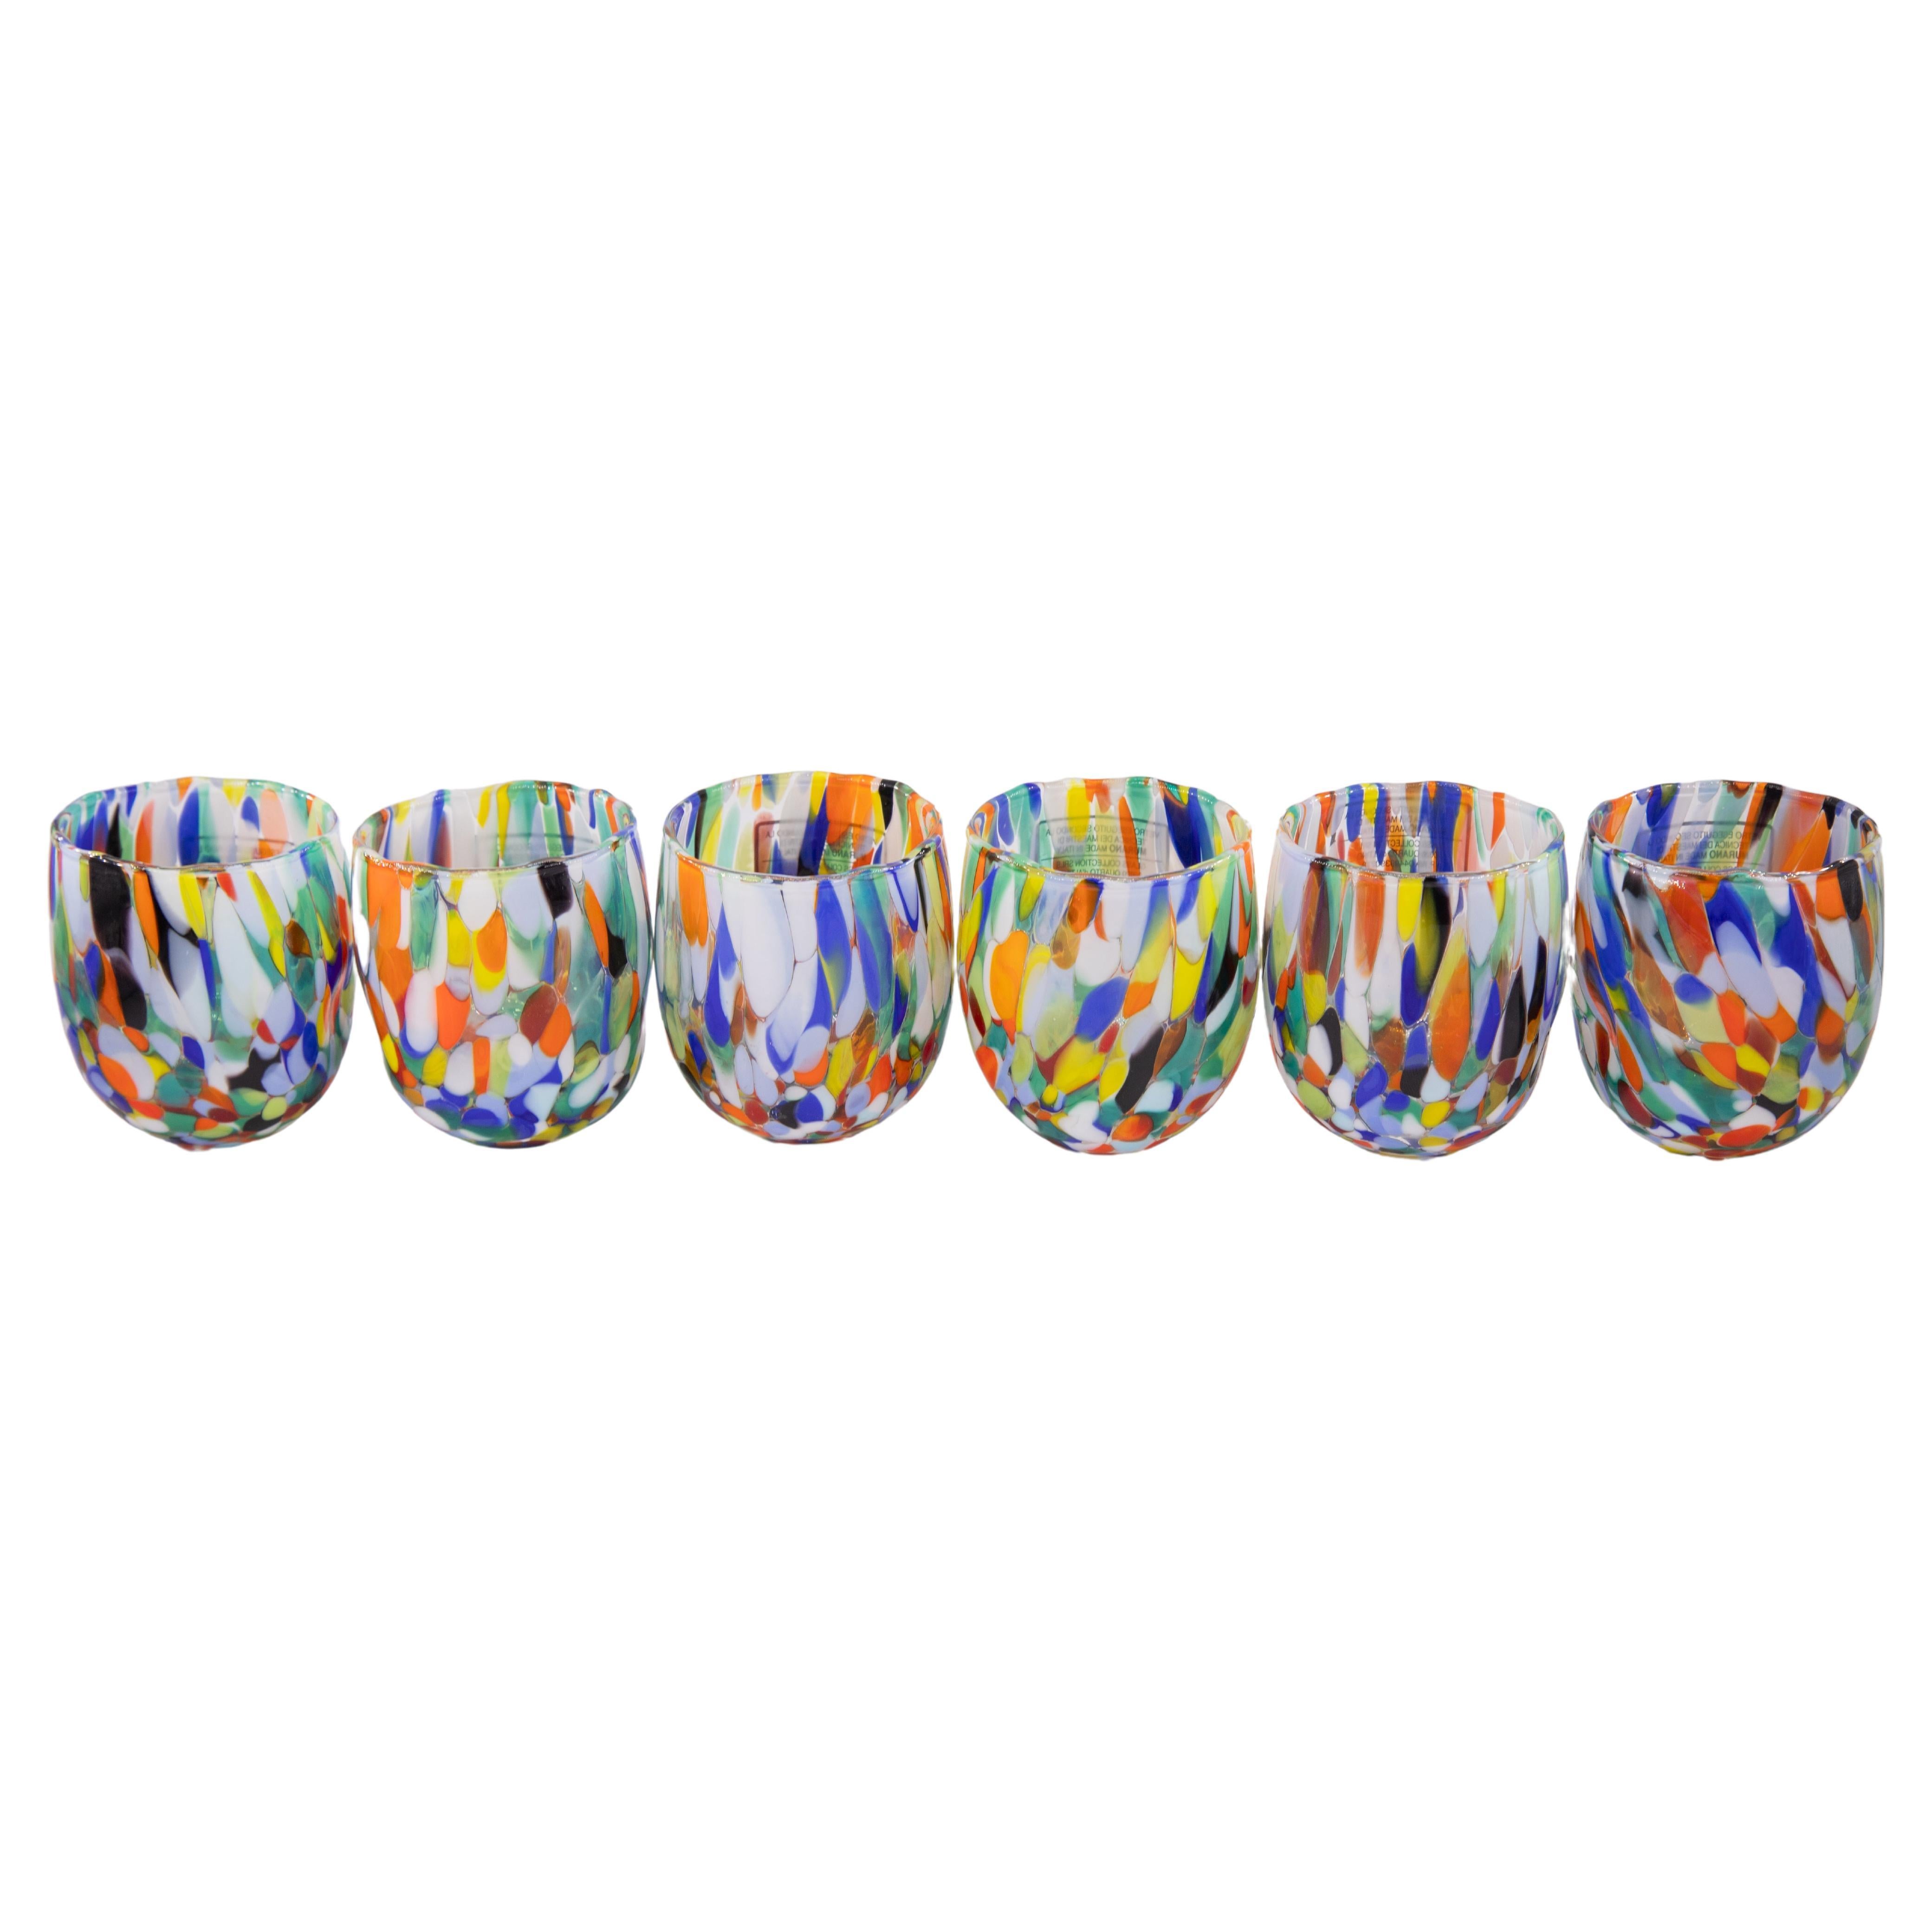 Ensemble de 6 verres de Murano couleur Arlecchino, faits à la main, verre de Murano